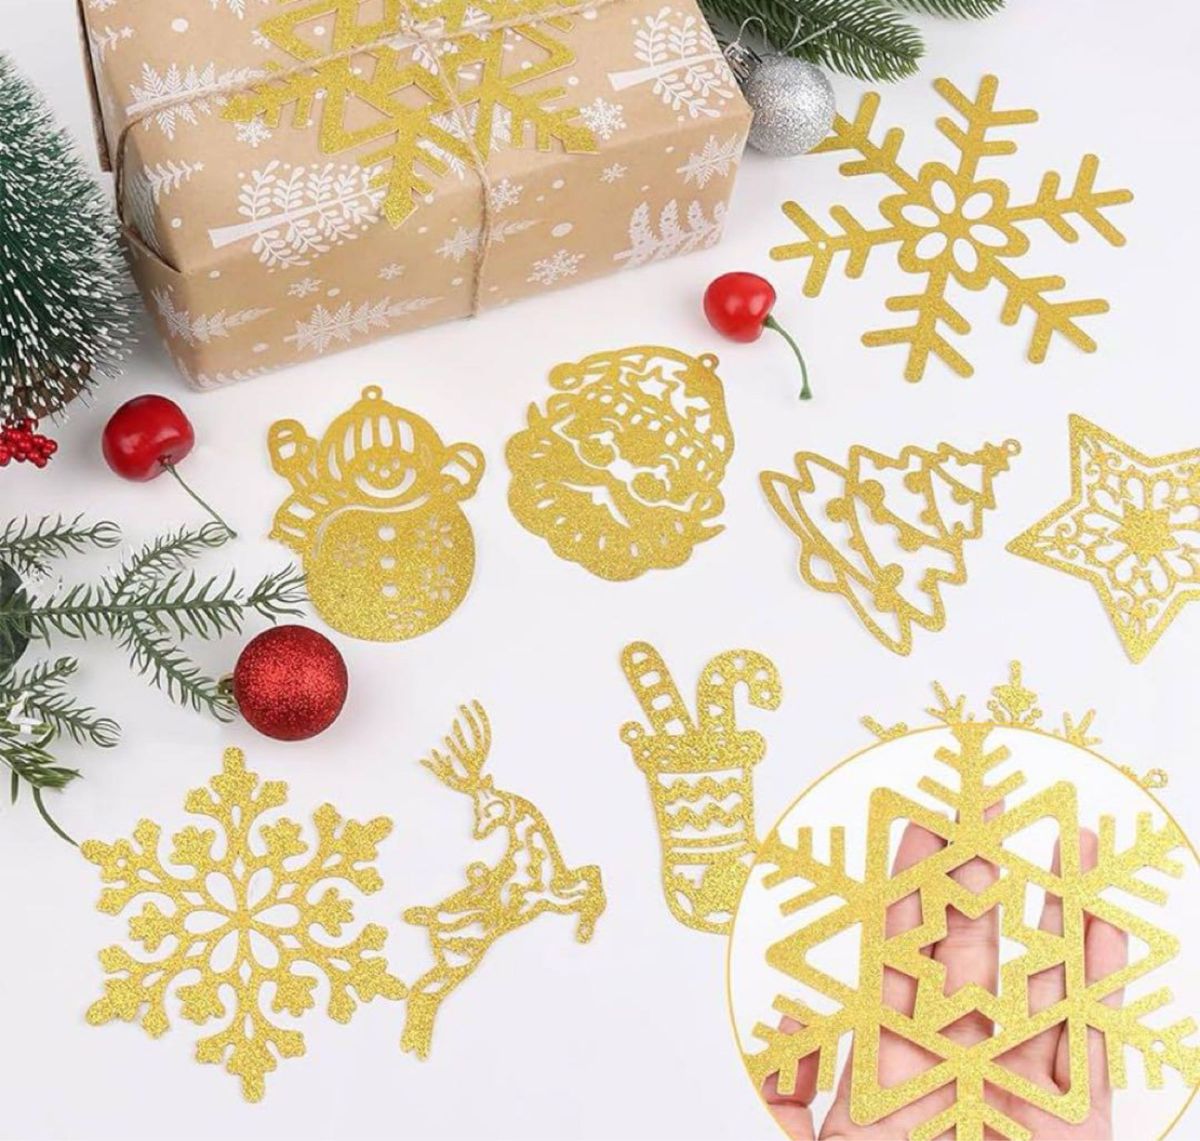 LOKIPA クリスマス 飾り付けセット クリスマス オーナメント デコレーション 装飾品 スノーフレーク 雪の結晶 ゴールド